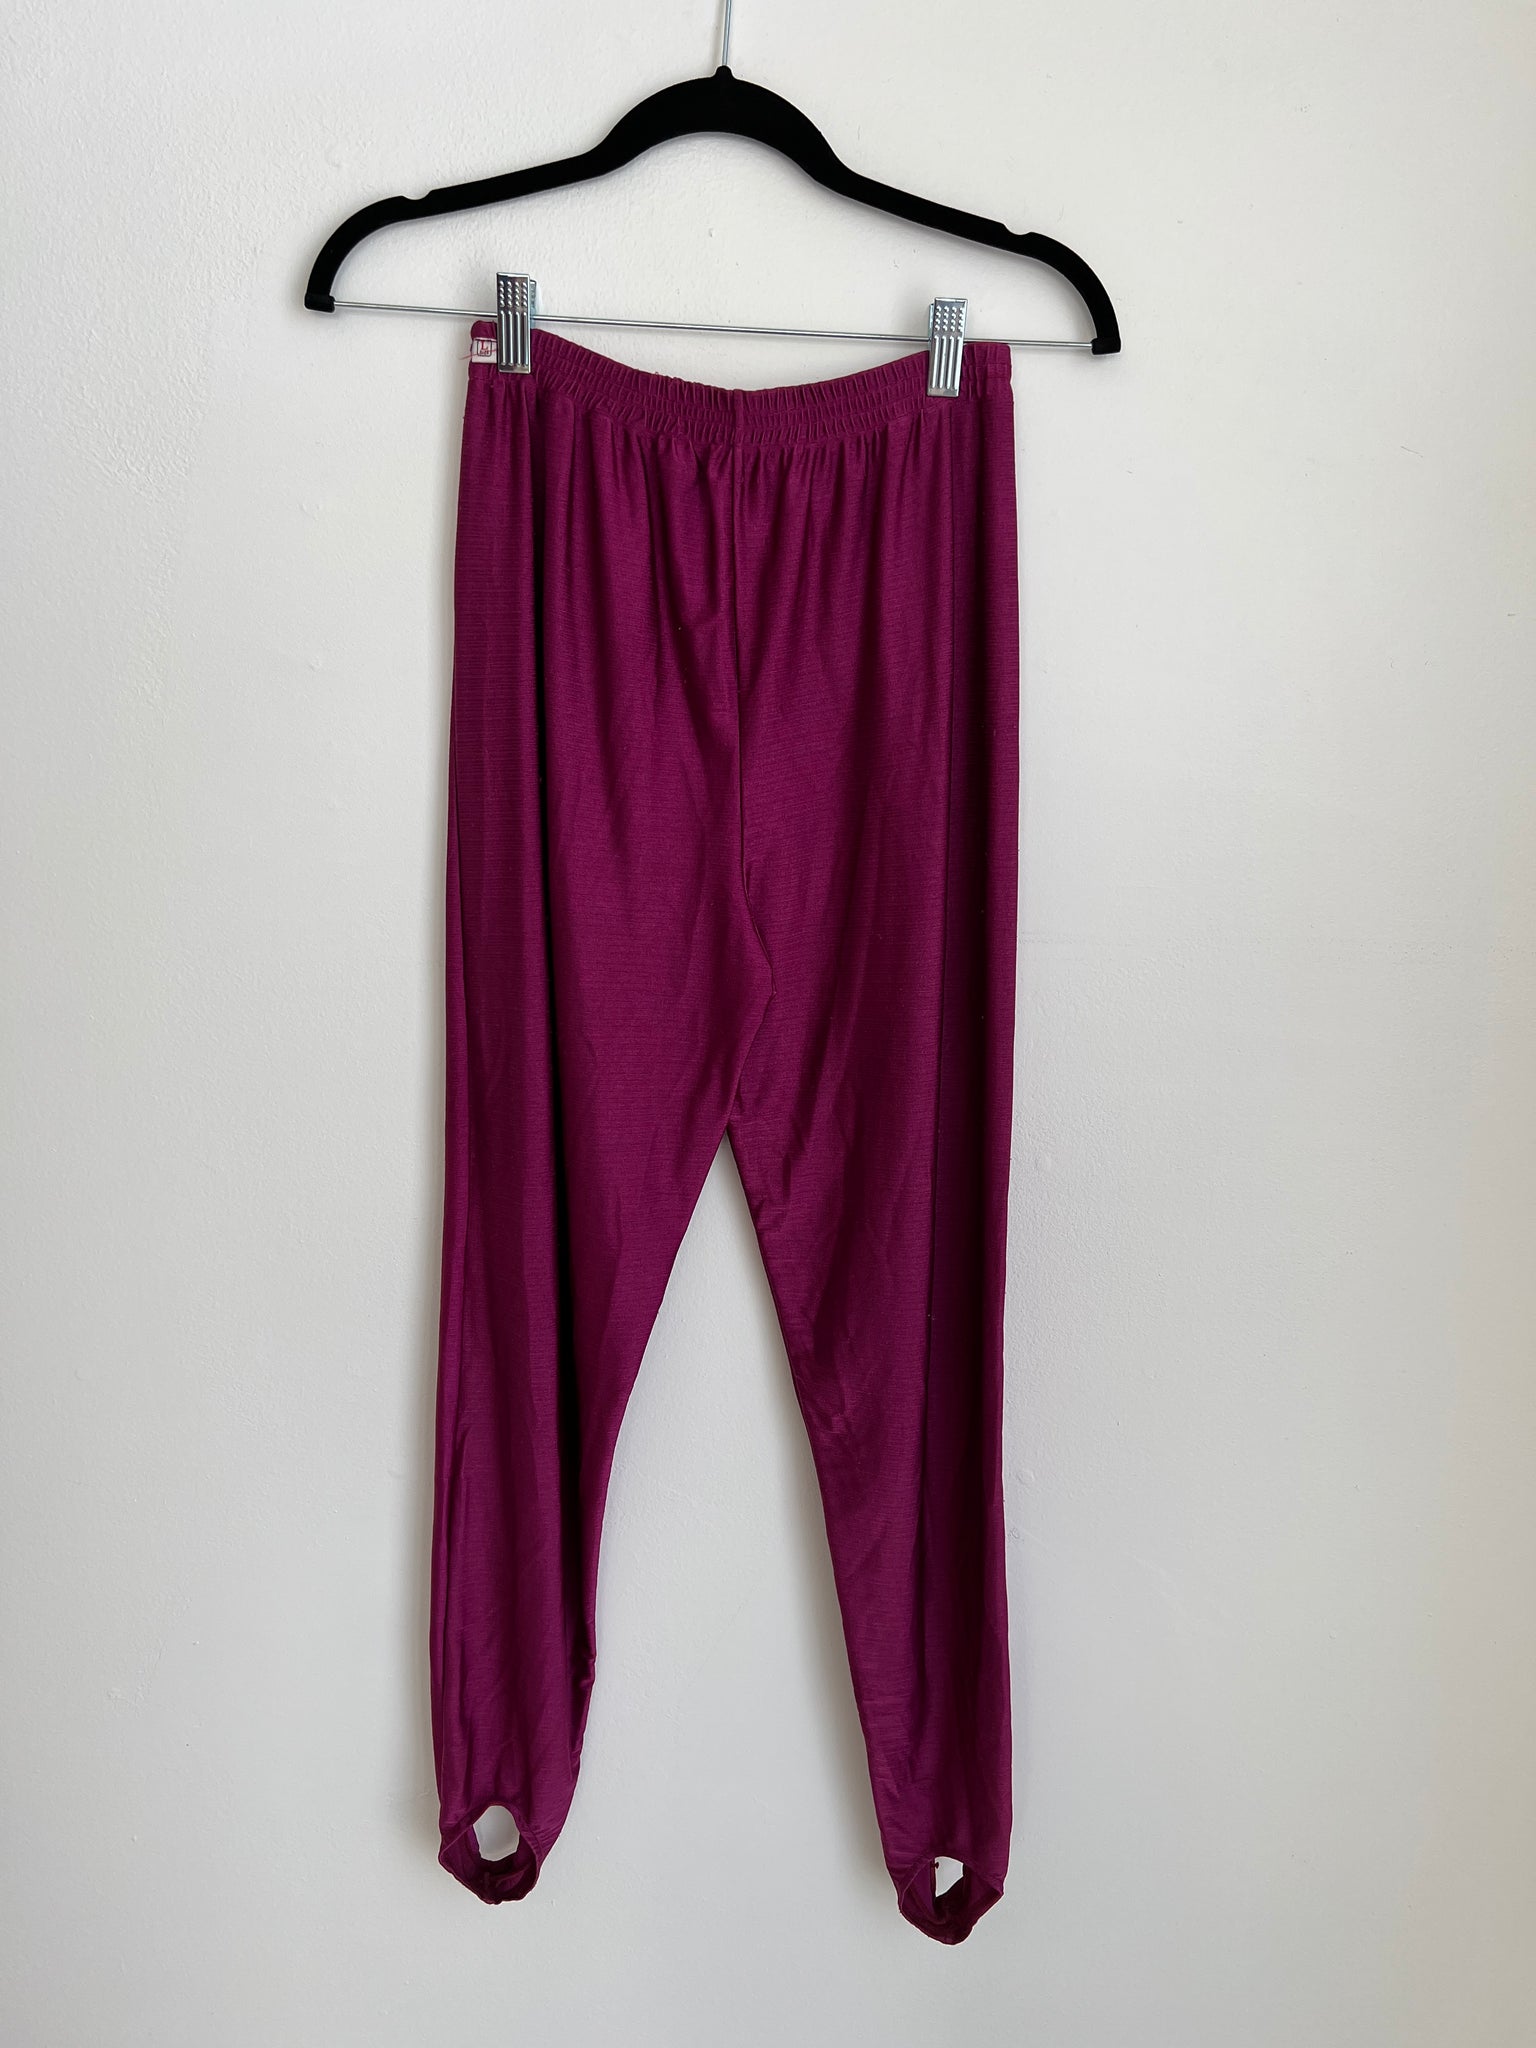 1980s PANTS- magenta stirup leggings